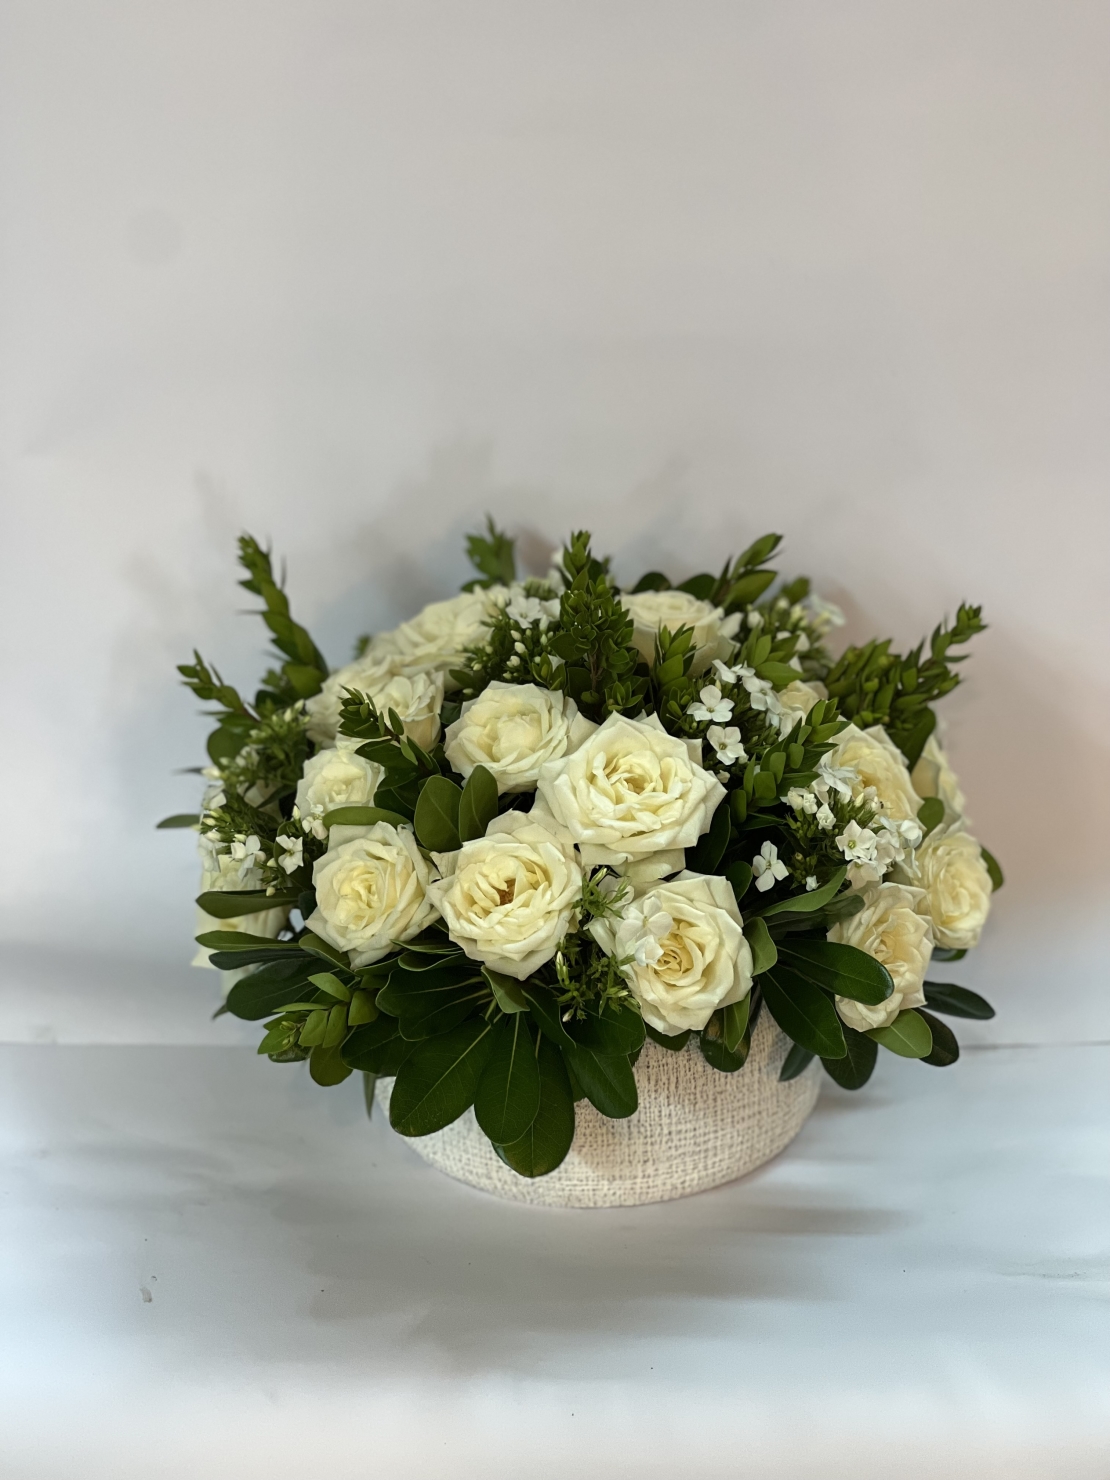 A white arrangement for Rosh Hashanah